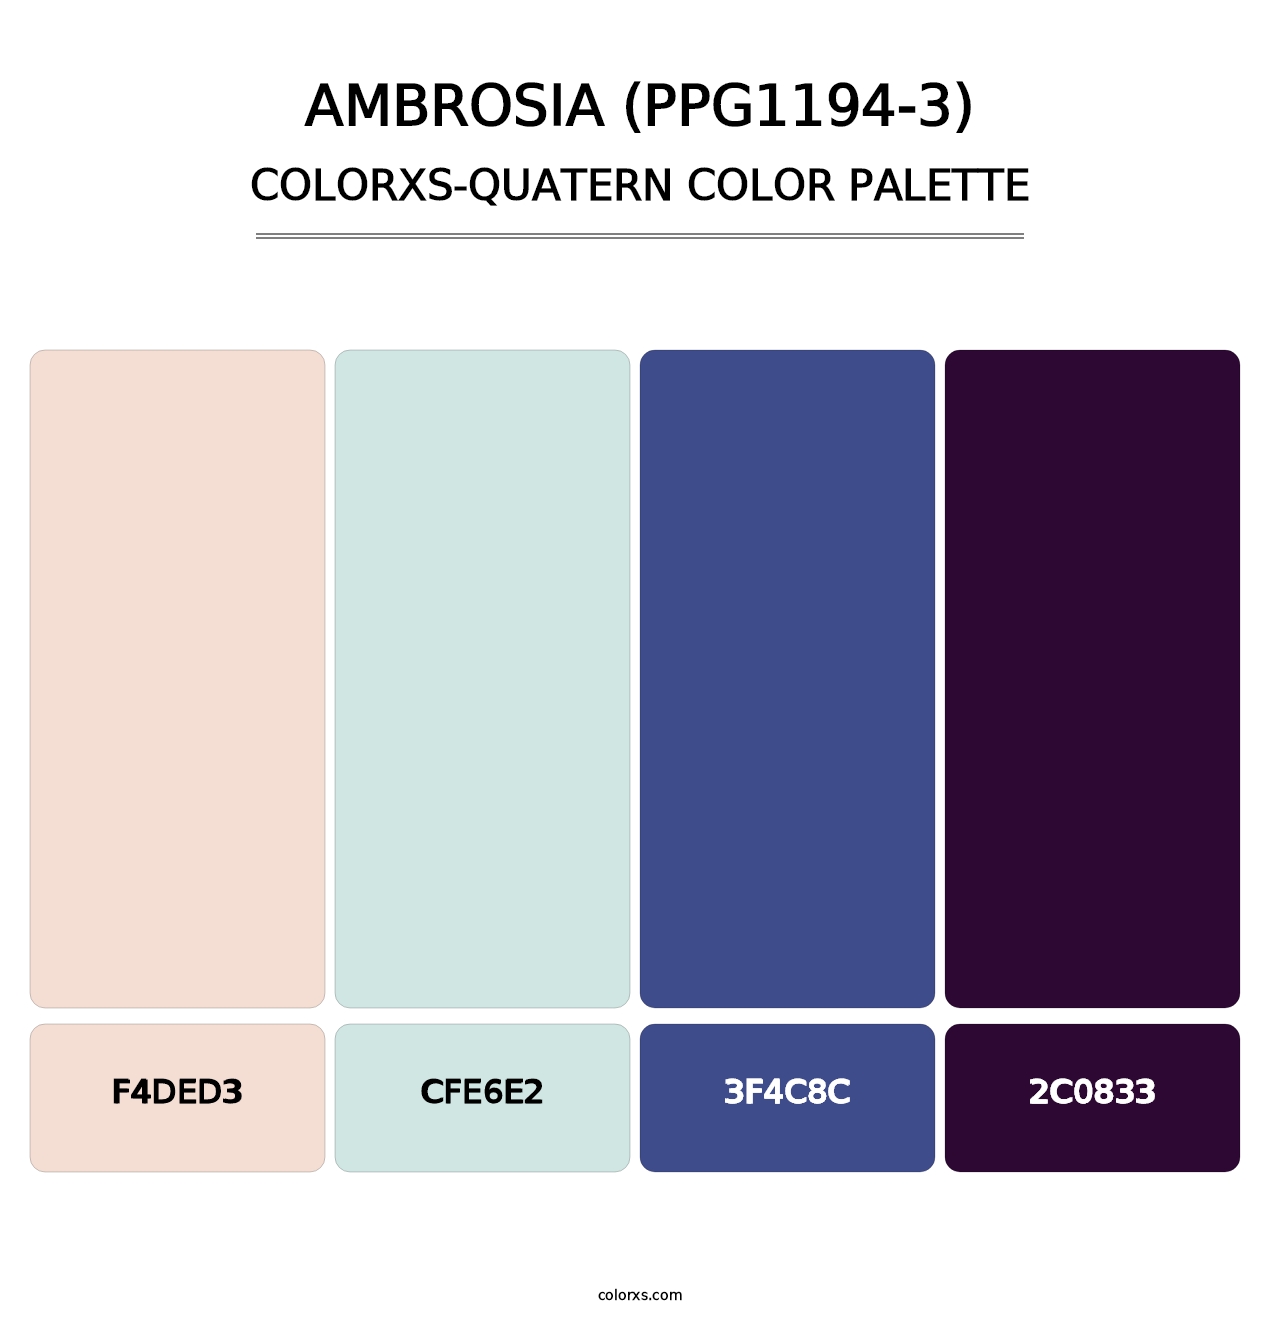 Ambrosia (PPG1194-3) - Colorxs Quatern Palette